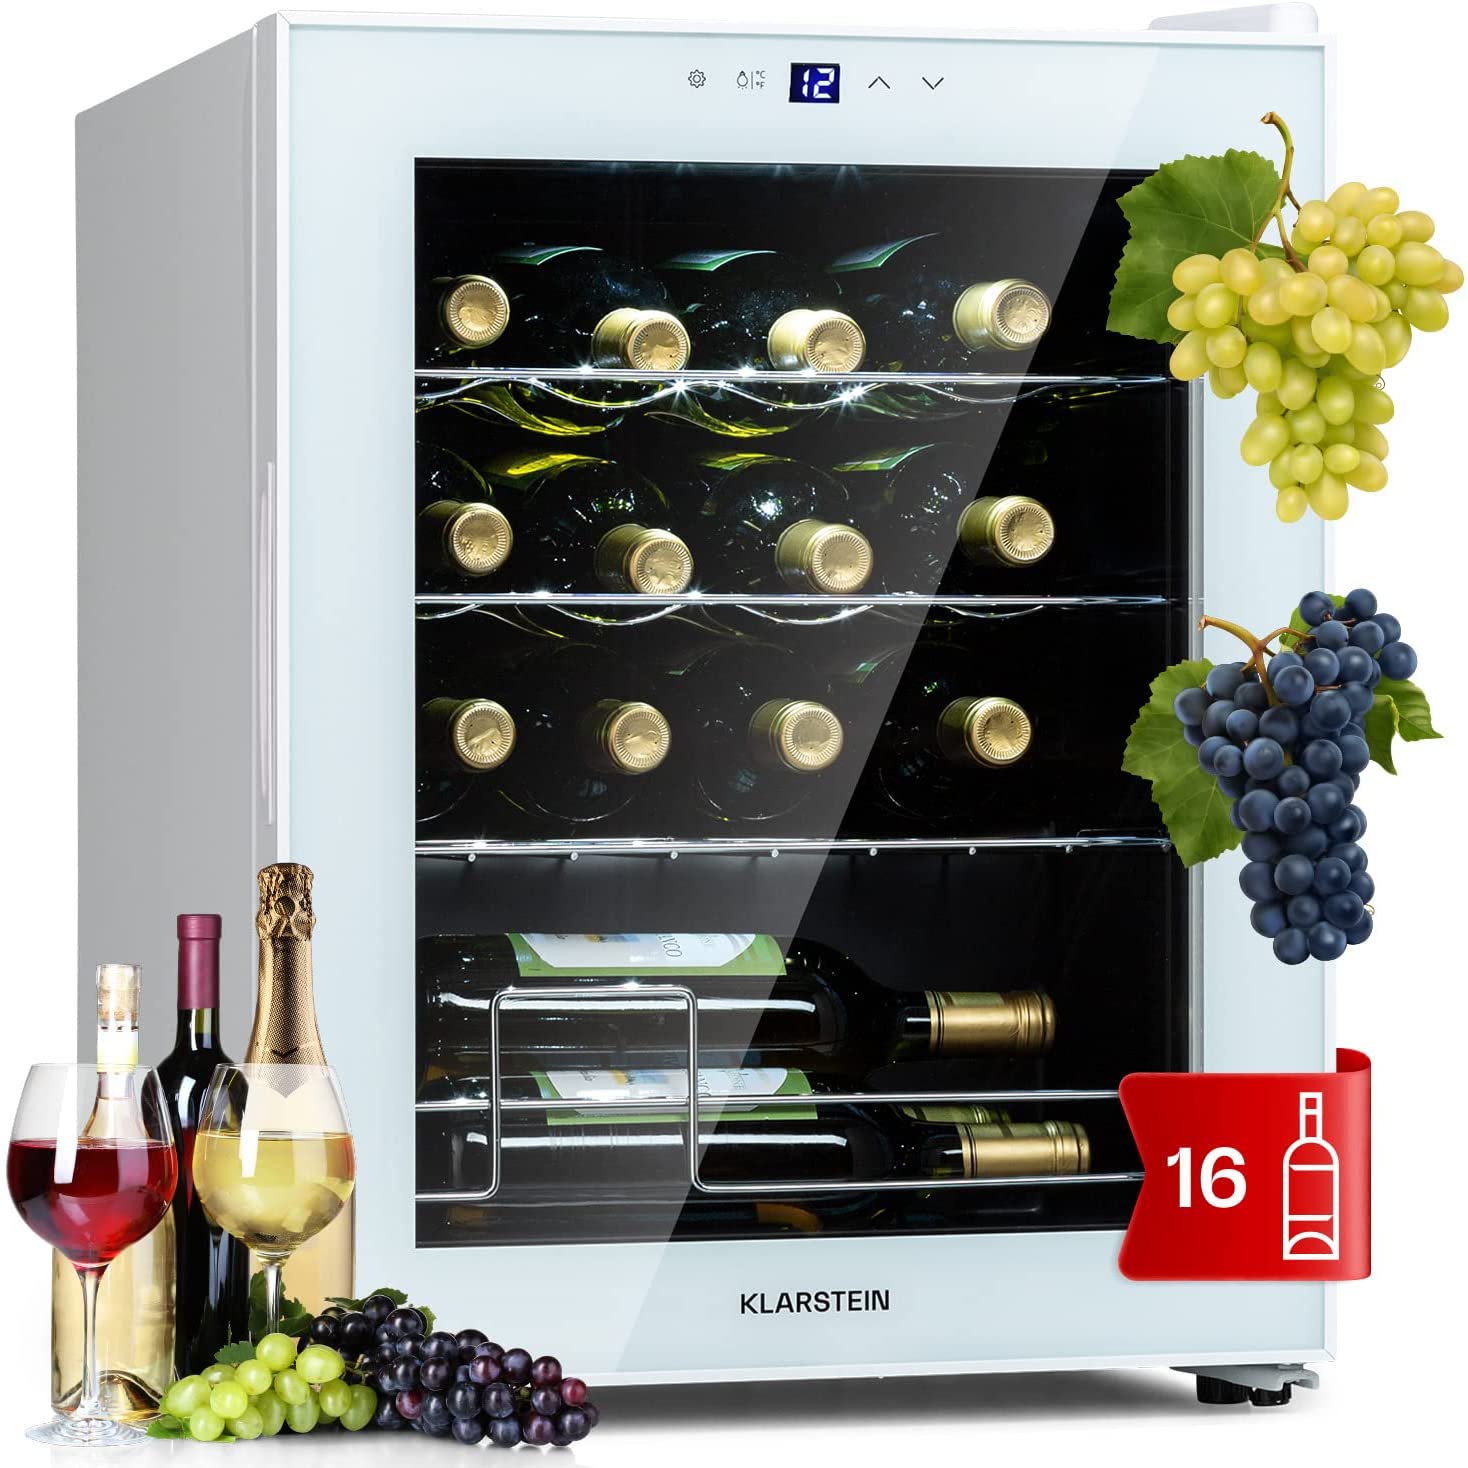 Klarstein Shiraz Wine Refrigerator 5-18°C 42dB Soft Touch Control Panel Wine Cabinet with LED Lighting, Wine Fridge Freestanding, 3 Shelves, 42 Litres, for 16 Bottles of Wine, White